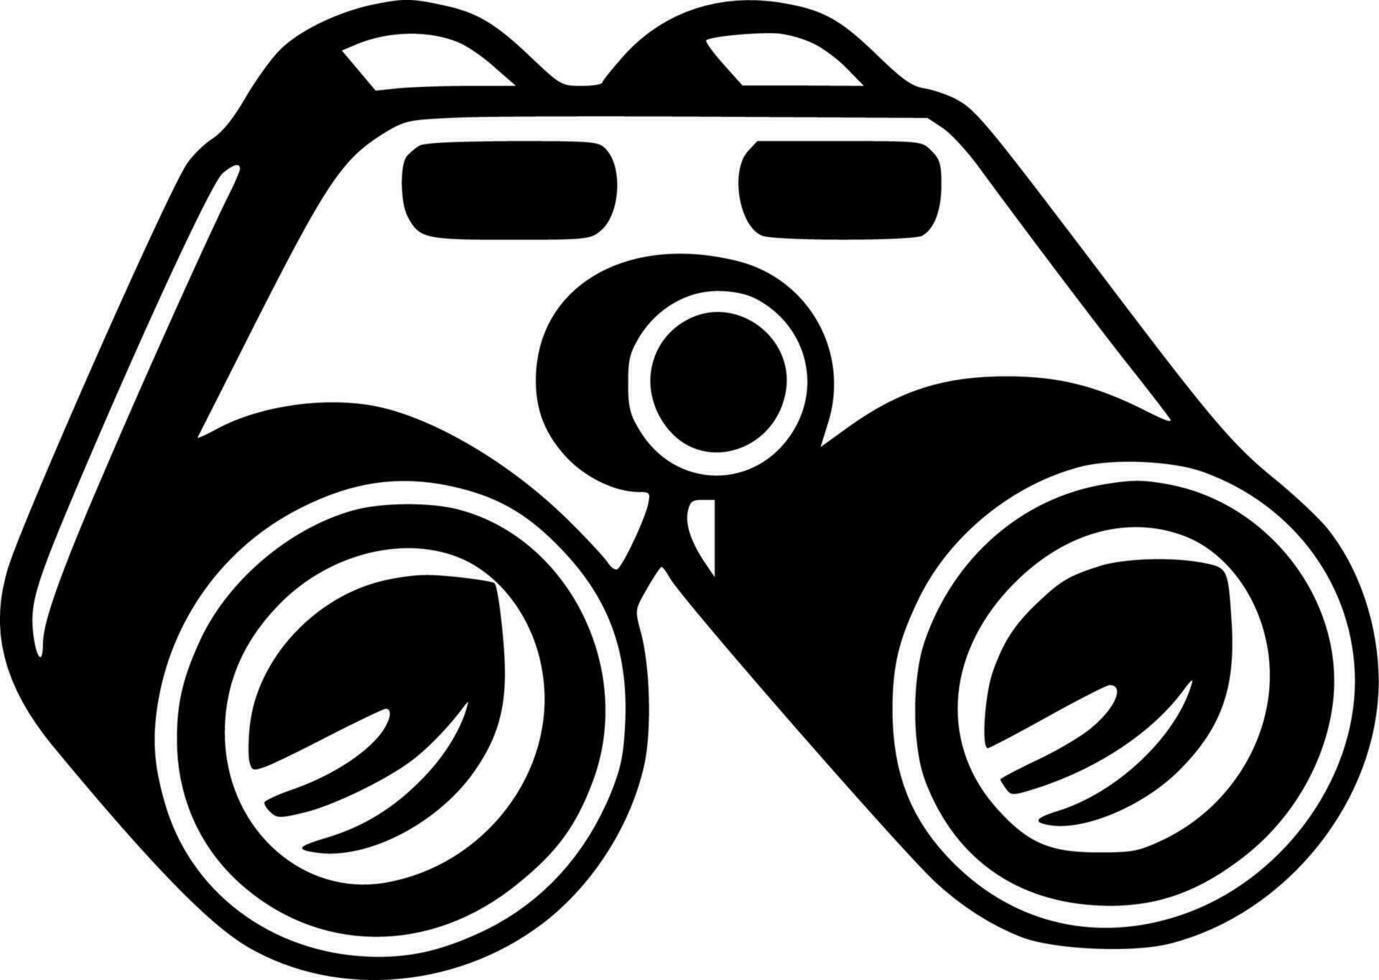 Binoculars, Black and White Vector illustration